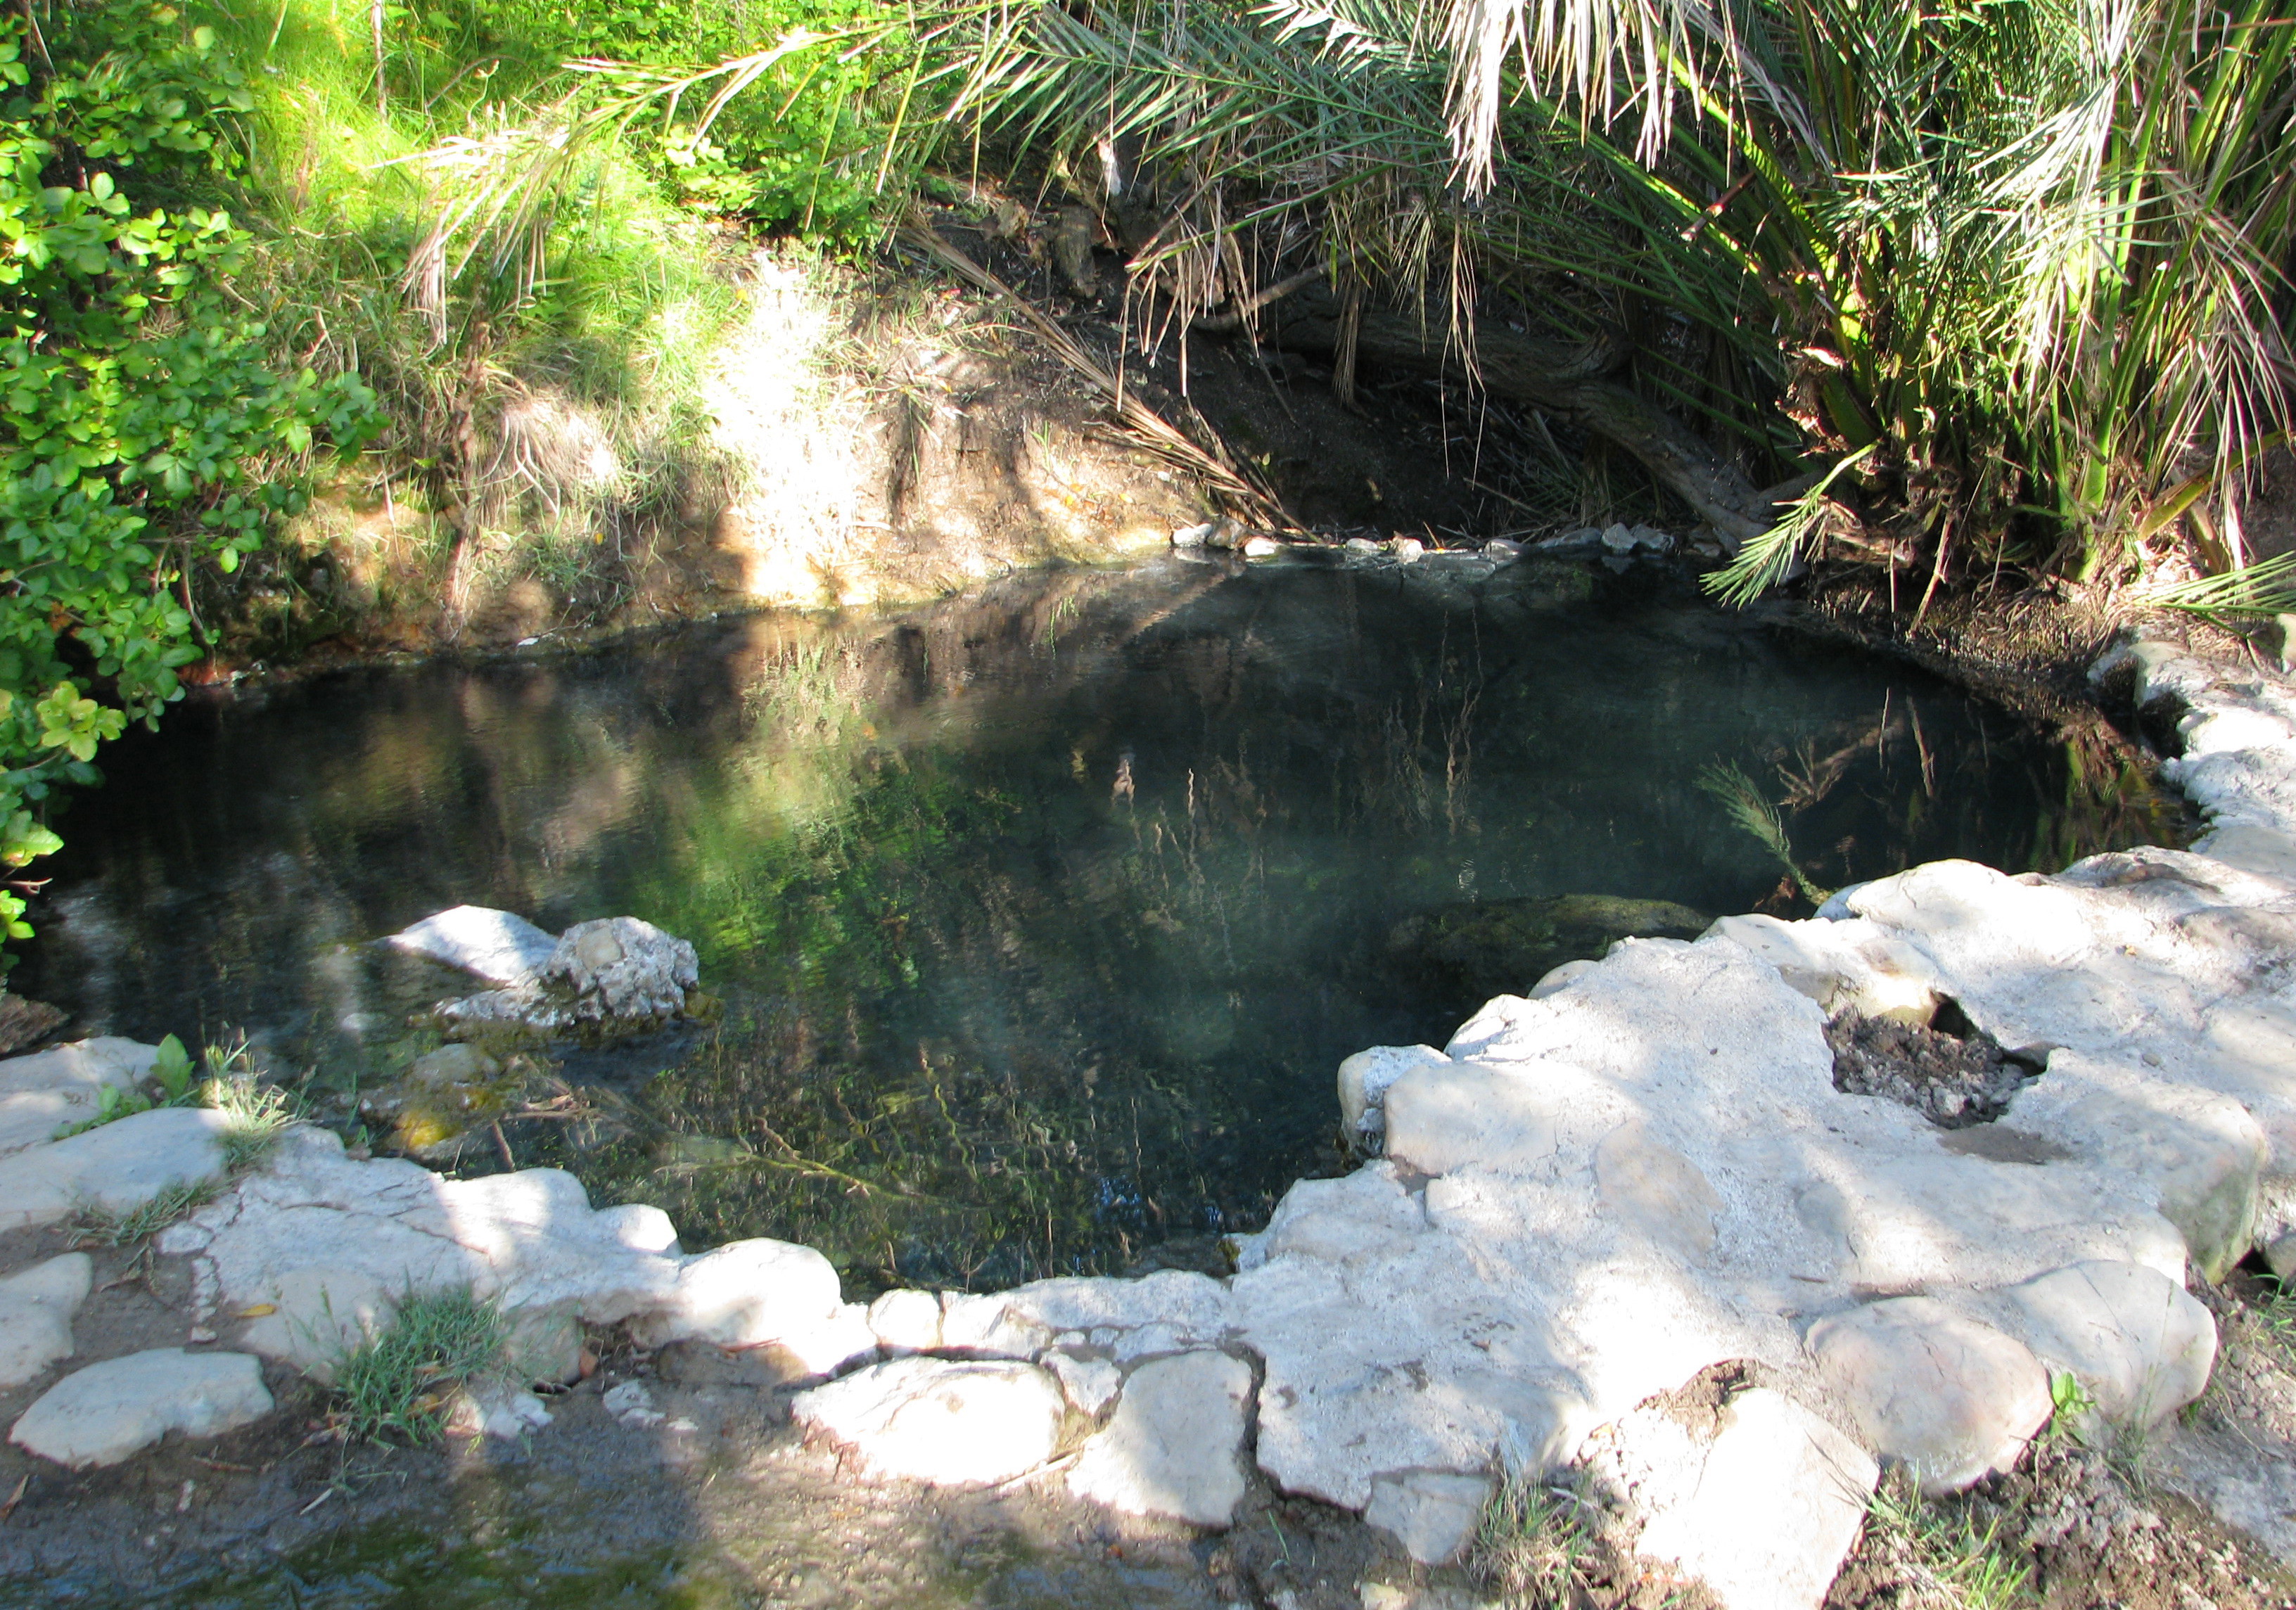 Hot Springs In Santa Barbara - Amazing Natural Springs To Enjoy